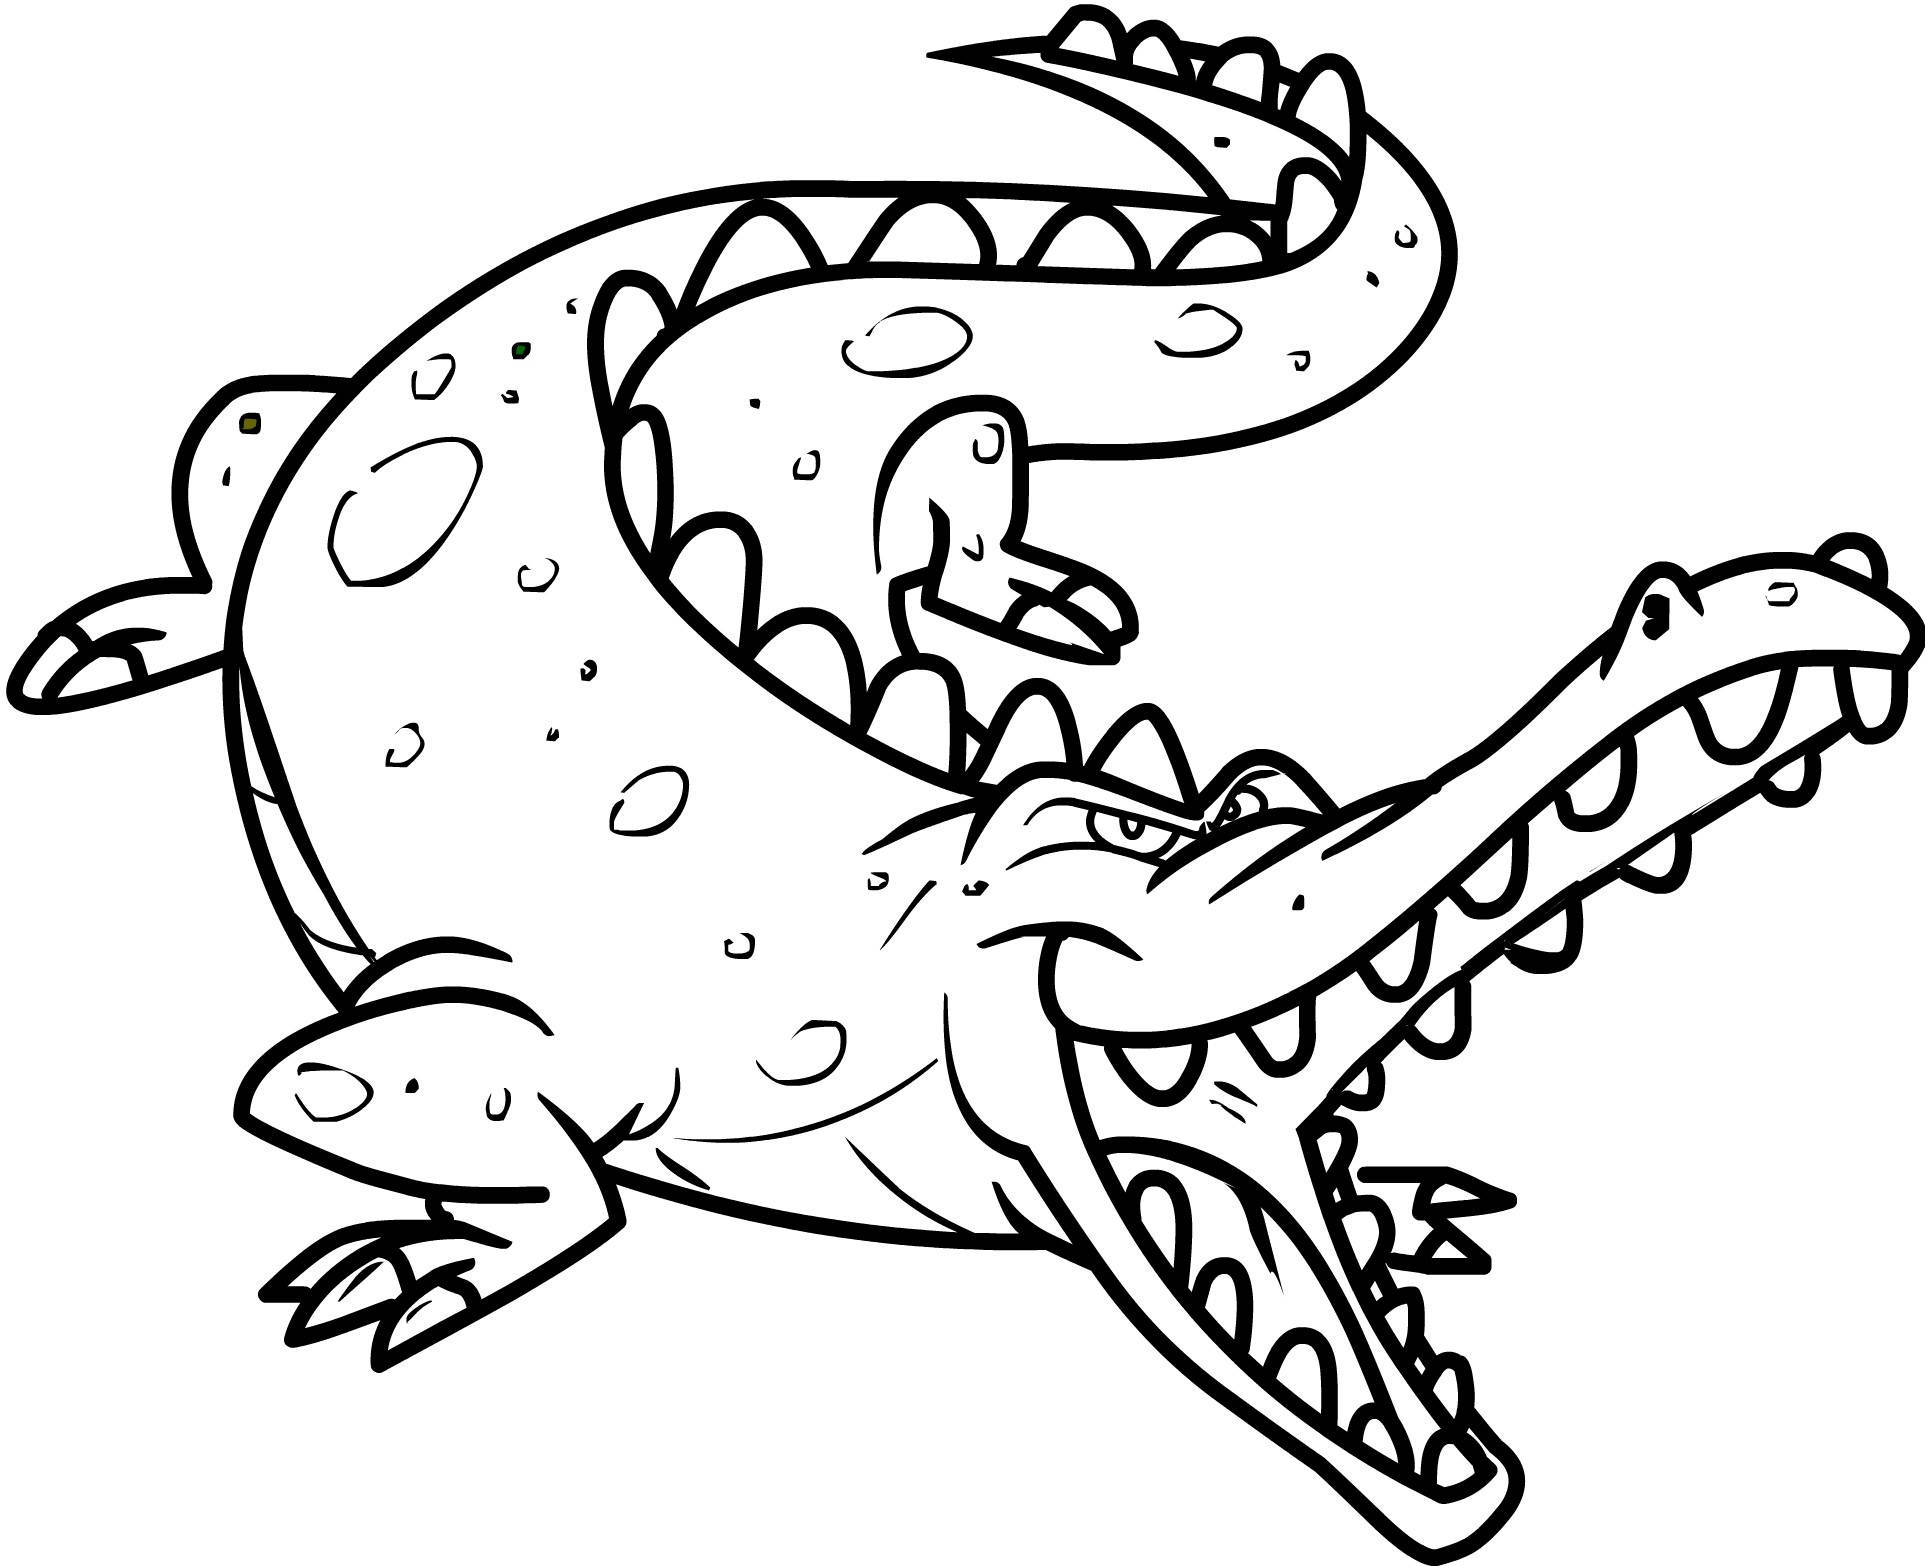 New Cartoon Crocodile Coloring Page